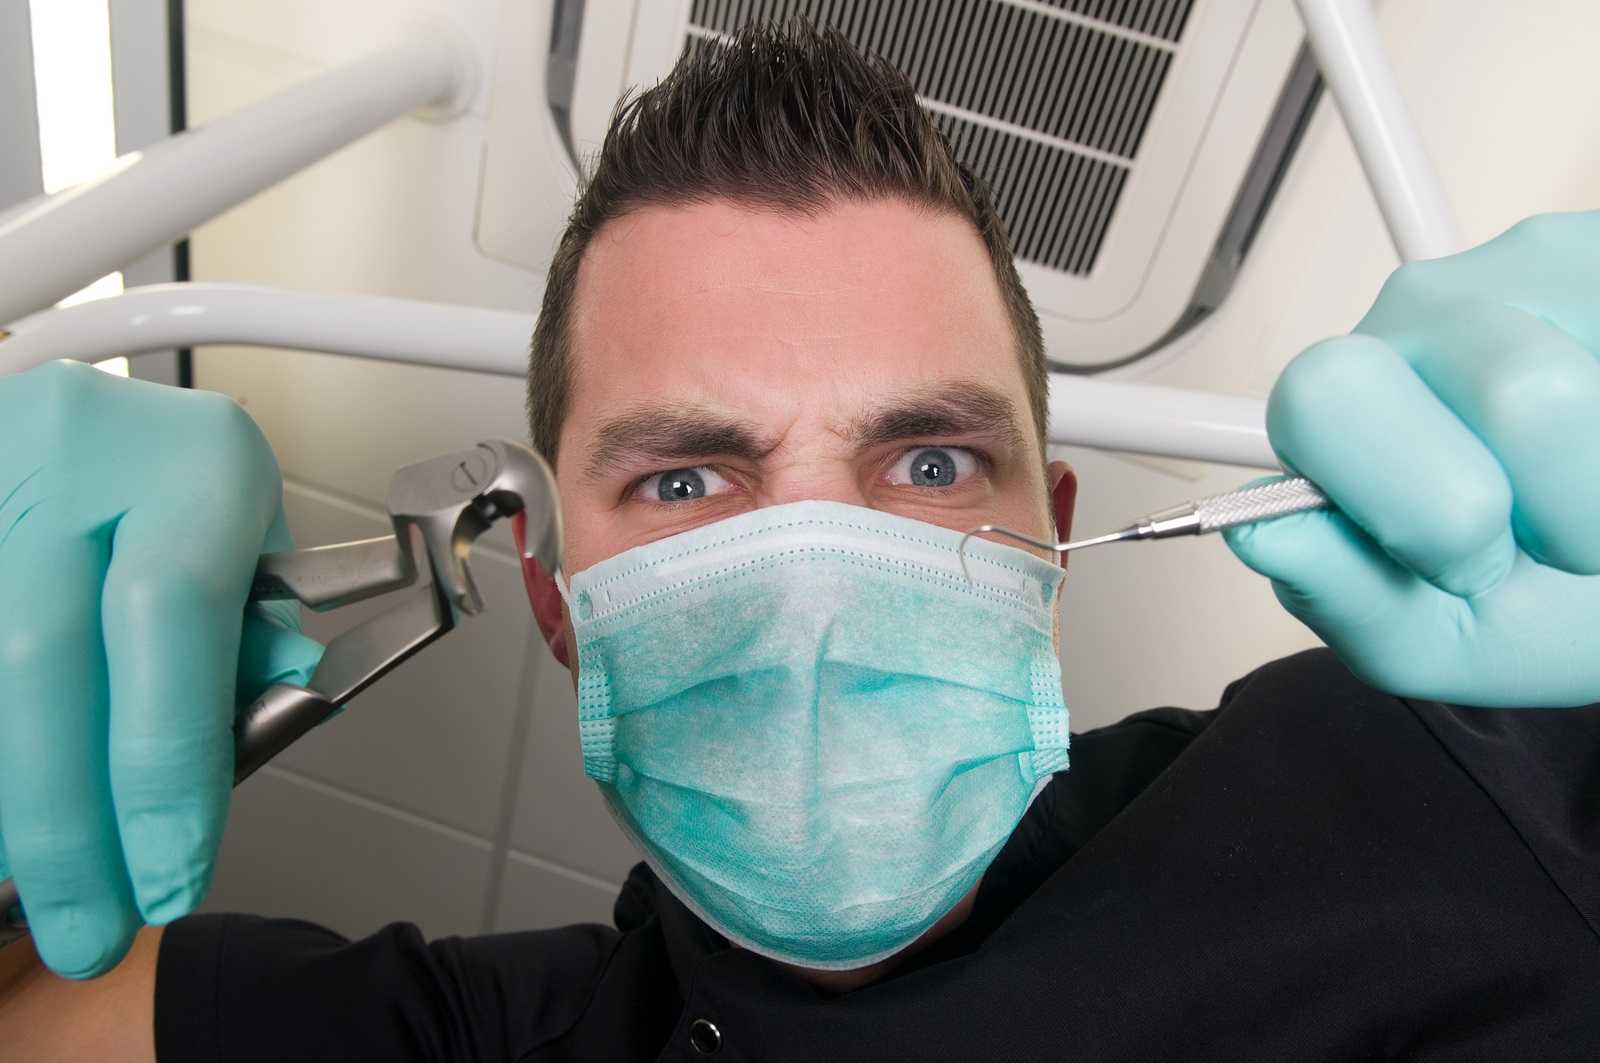 What is Dental Malpractice?